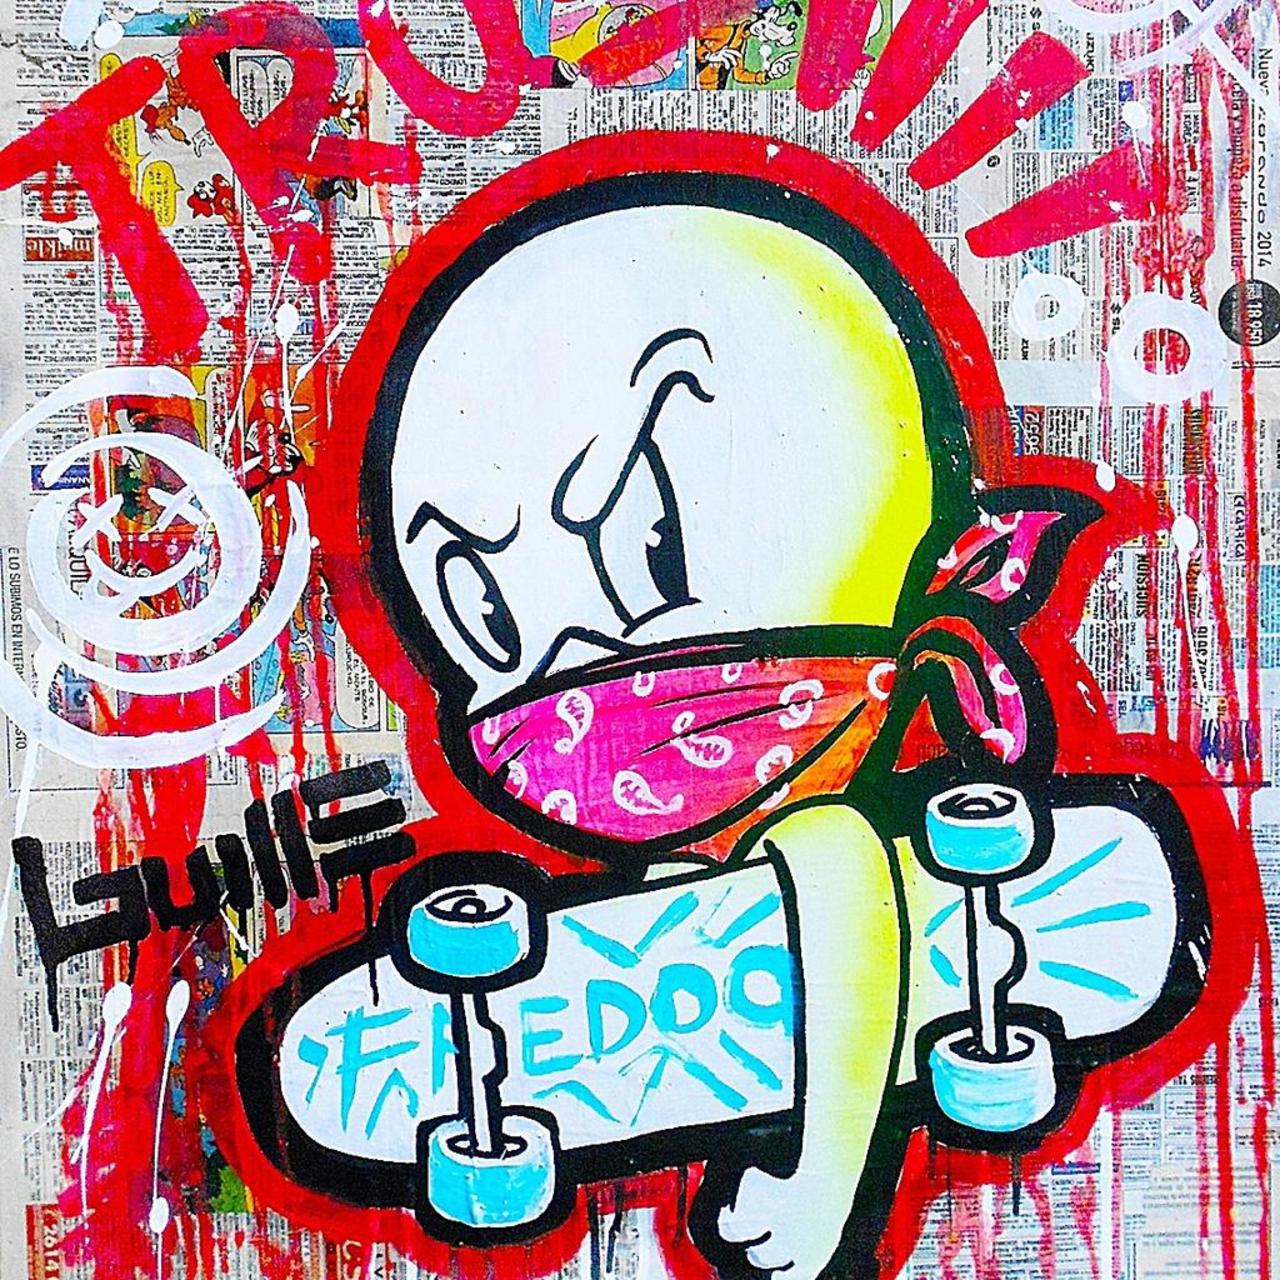 #Graffiti #Gasper #Skater
#Cool #Art #Uruguay #Artist  #popart #GuillermoVuljevas #streetArt #StreetArtEverywhere http://t.co/z1uIhbHj5u